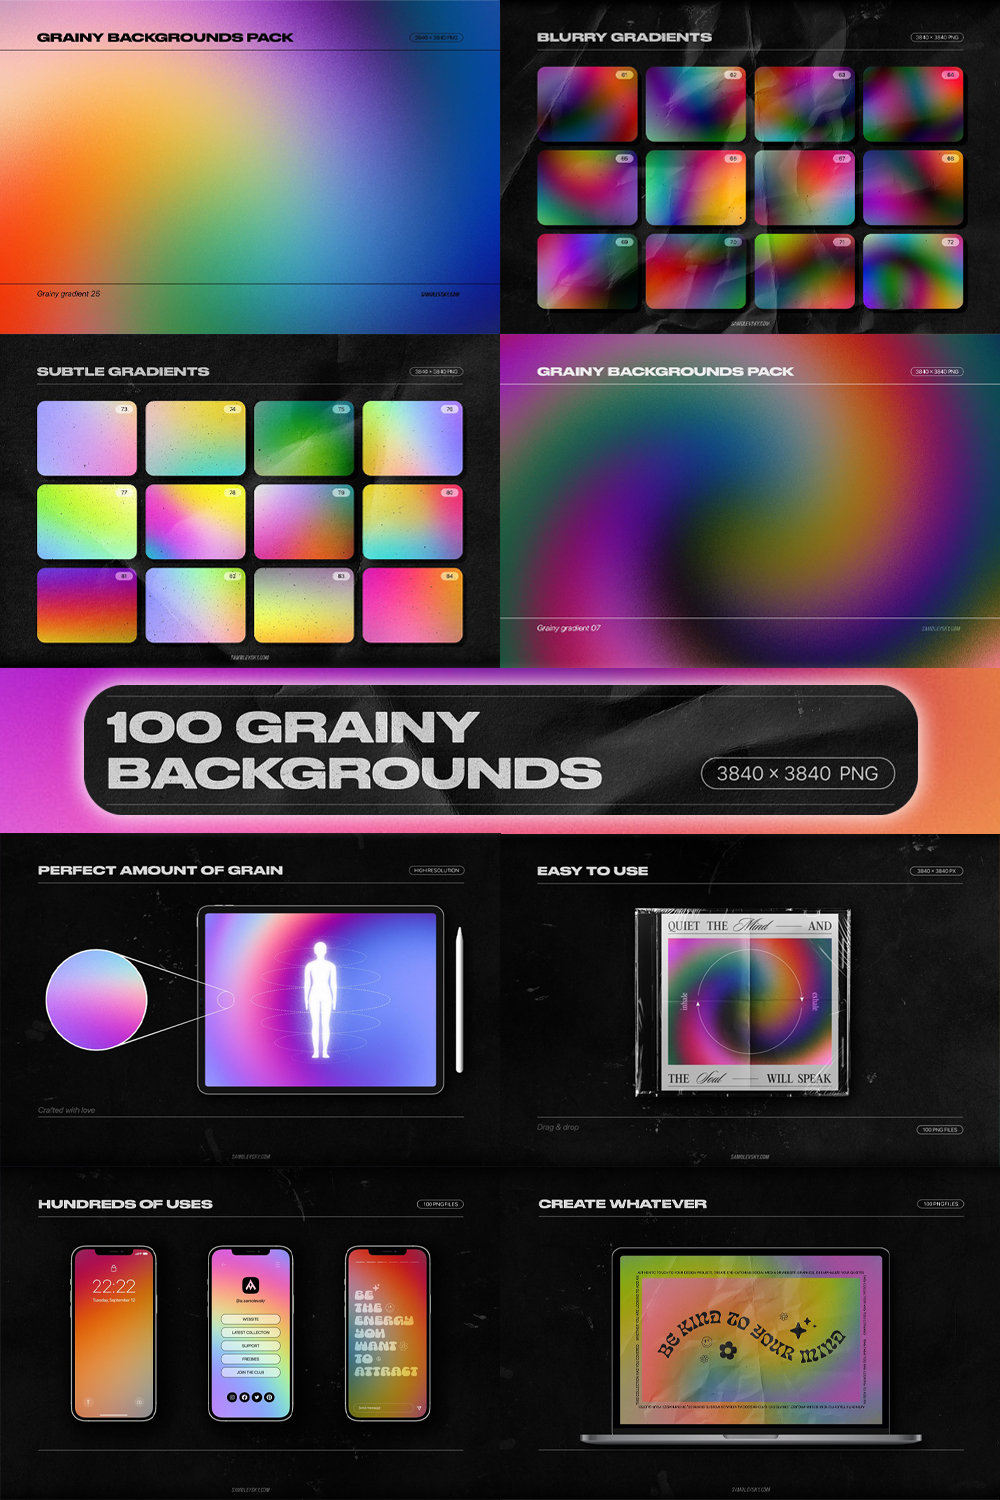 Grainy backgrounds 100 gradients of pinterest.